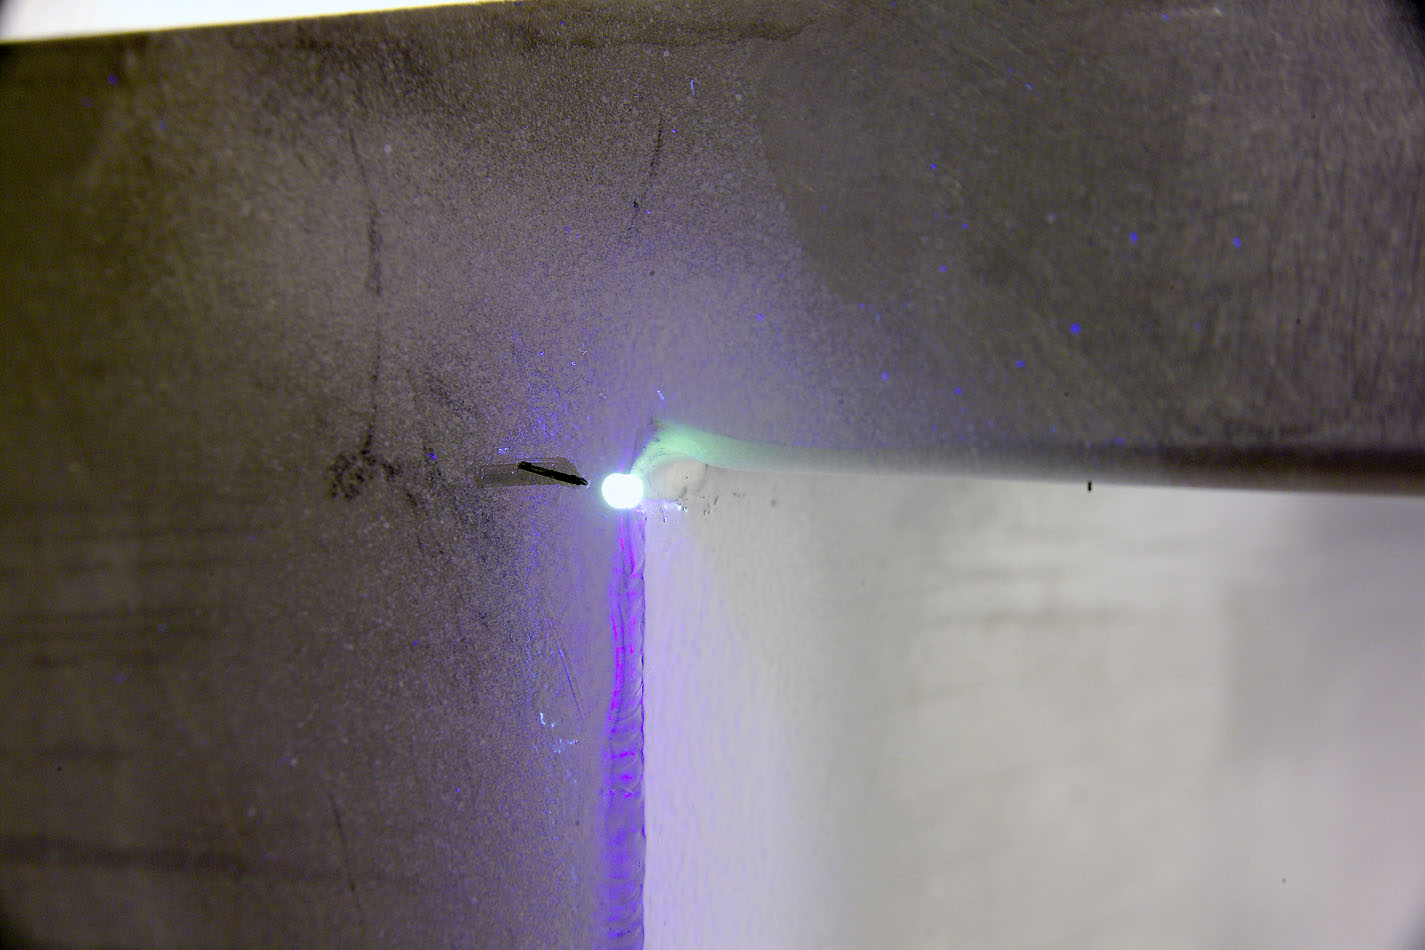 The Non-destructive evaluation technique of Liquid Penetrant Inspection can reveal weld surface cracks and pinholes.